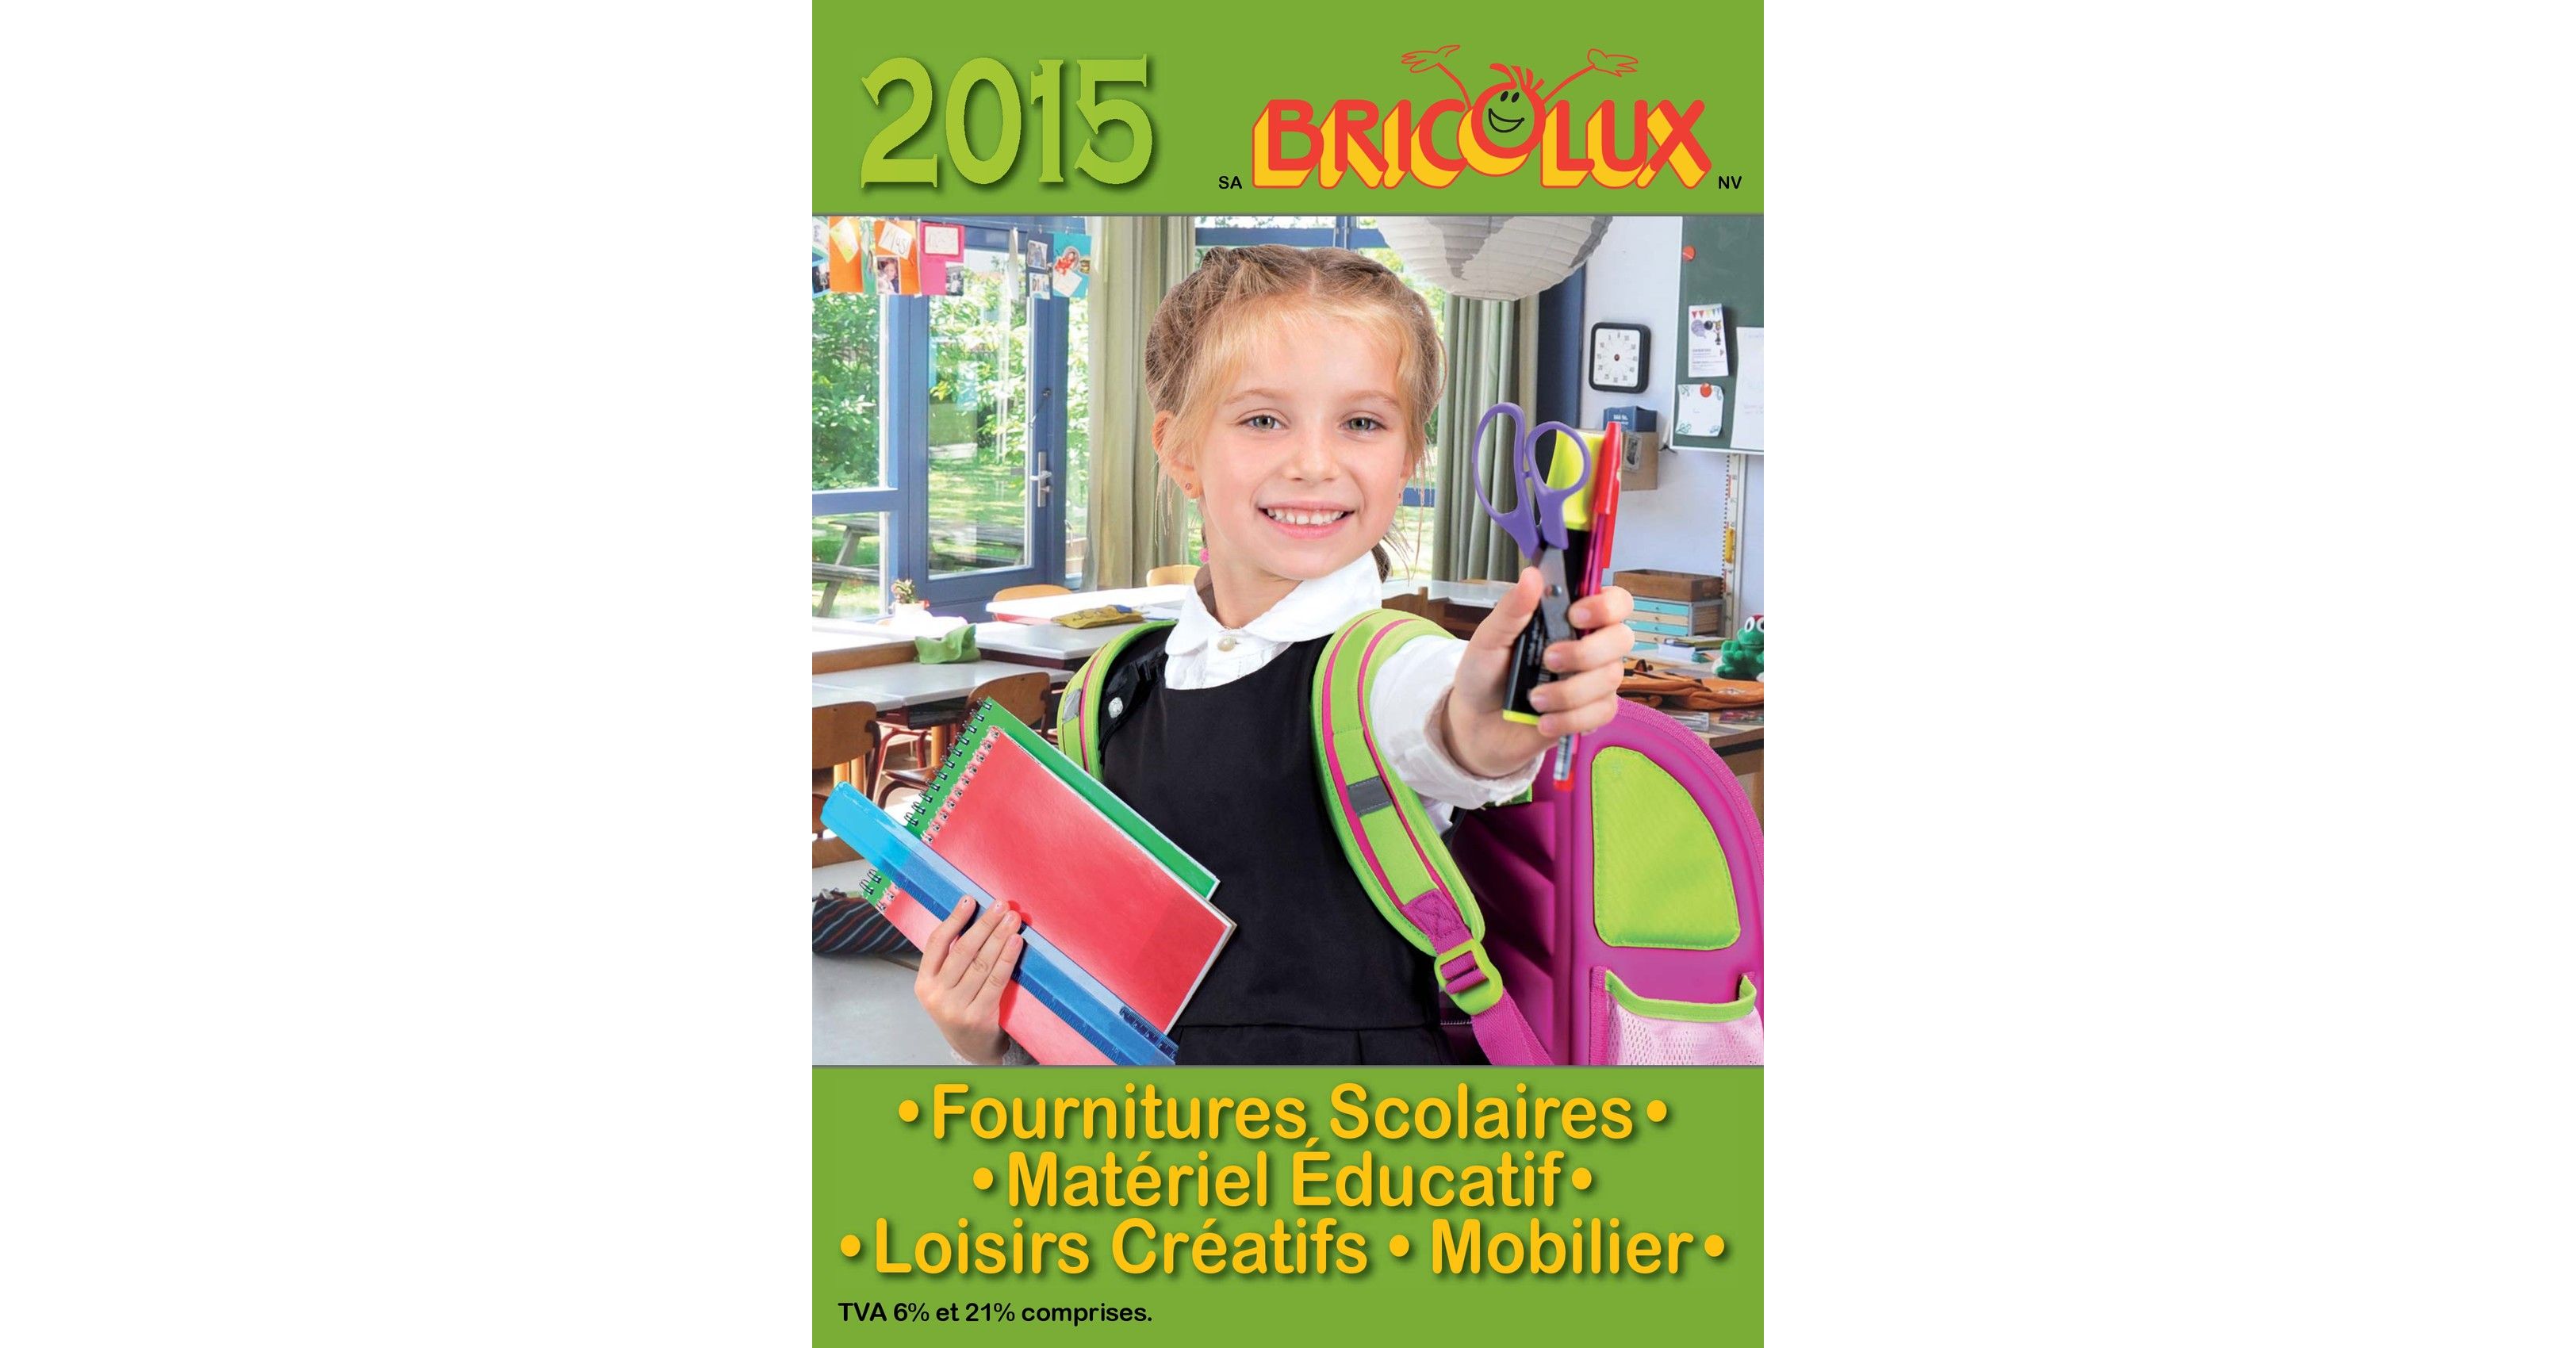 Bricolux - Fournitures et mobilier scolaires 2015